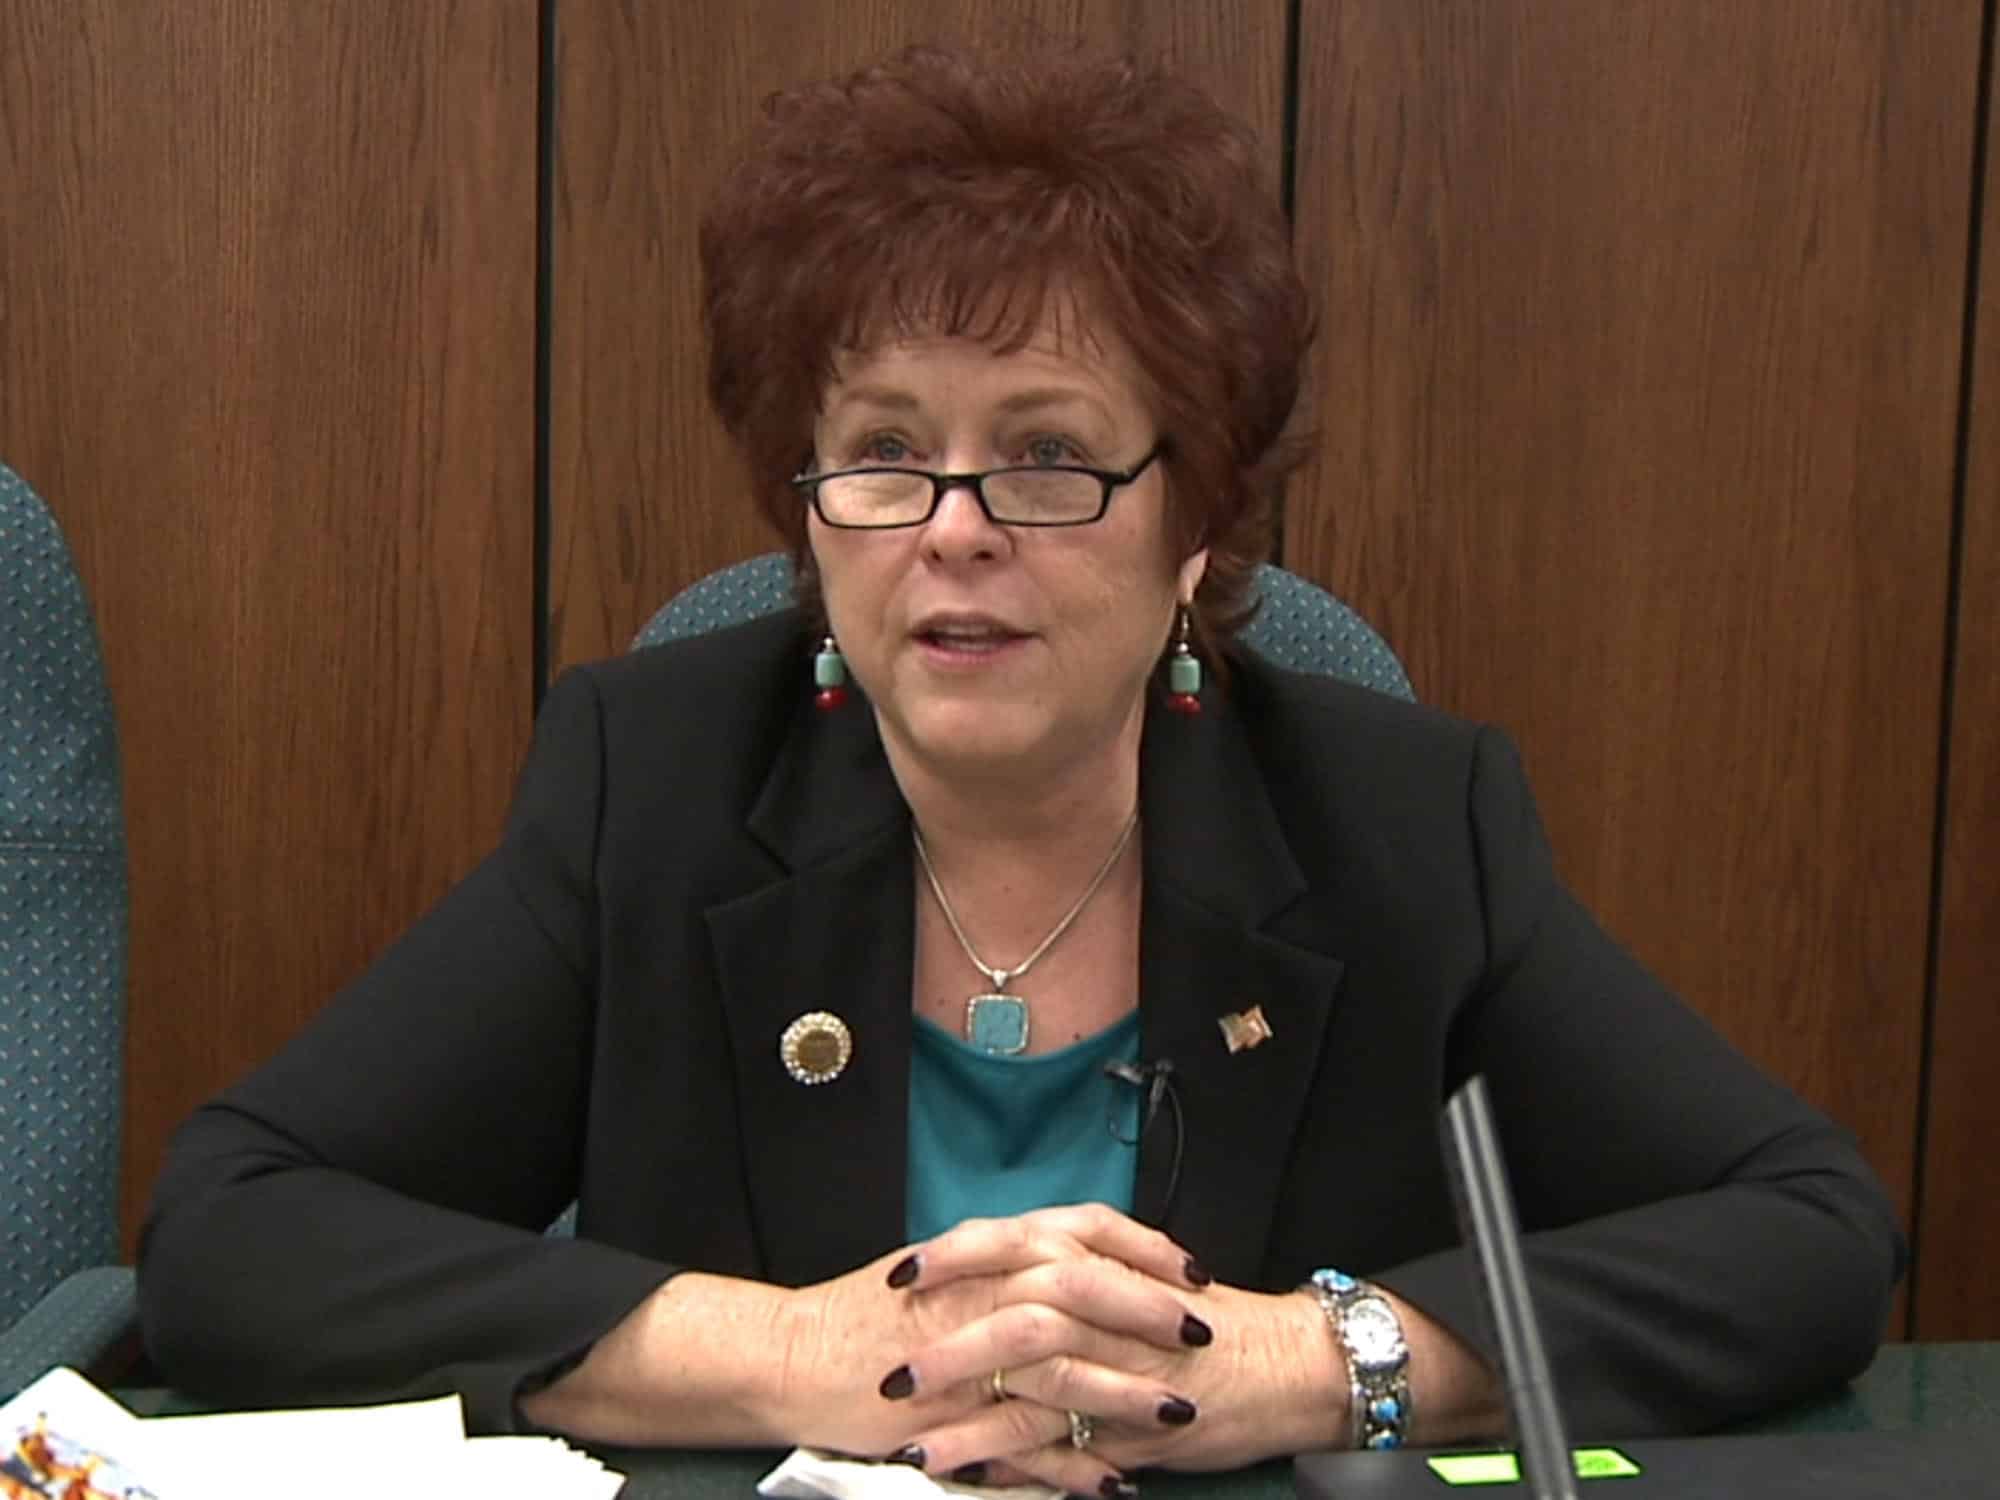 Arizona State Senator Sylvia Allen